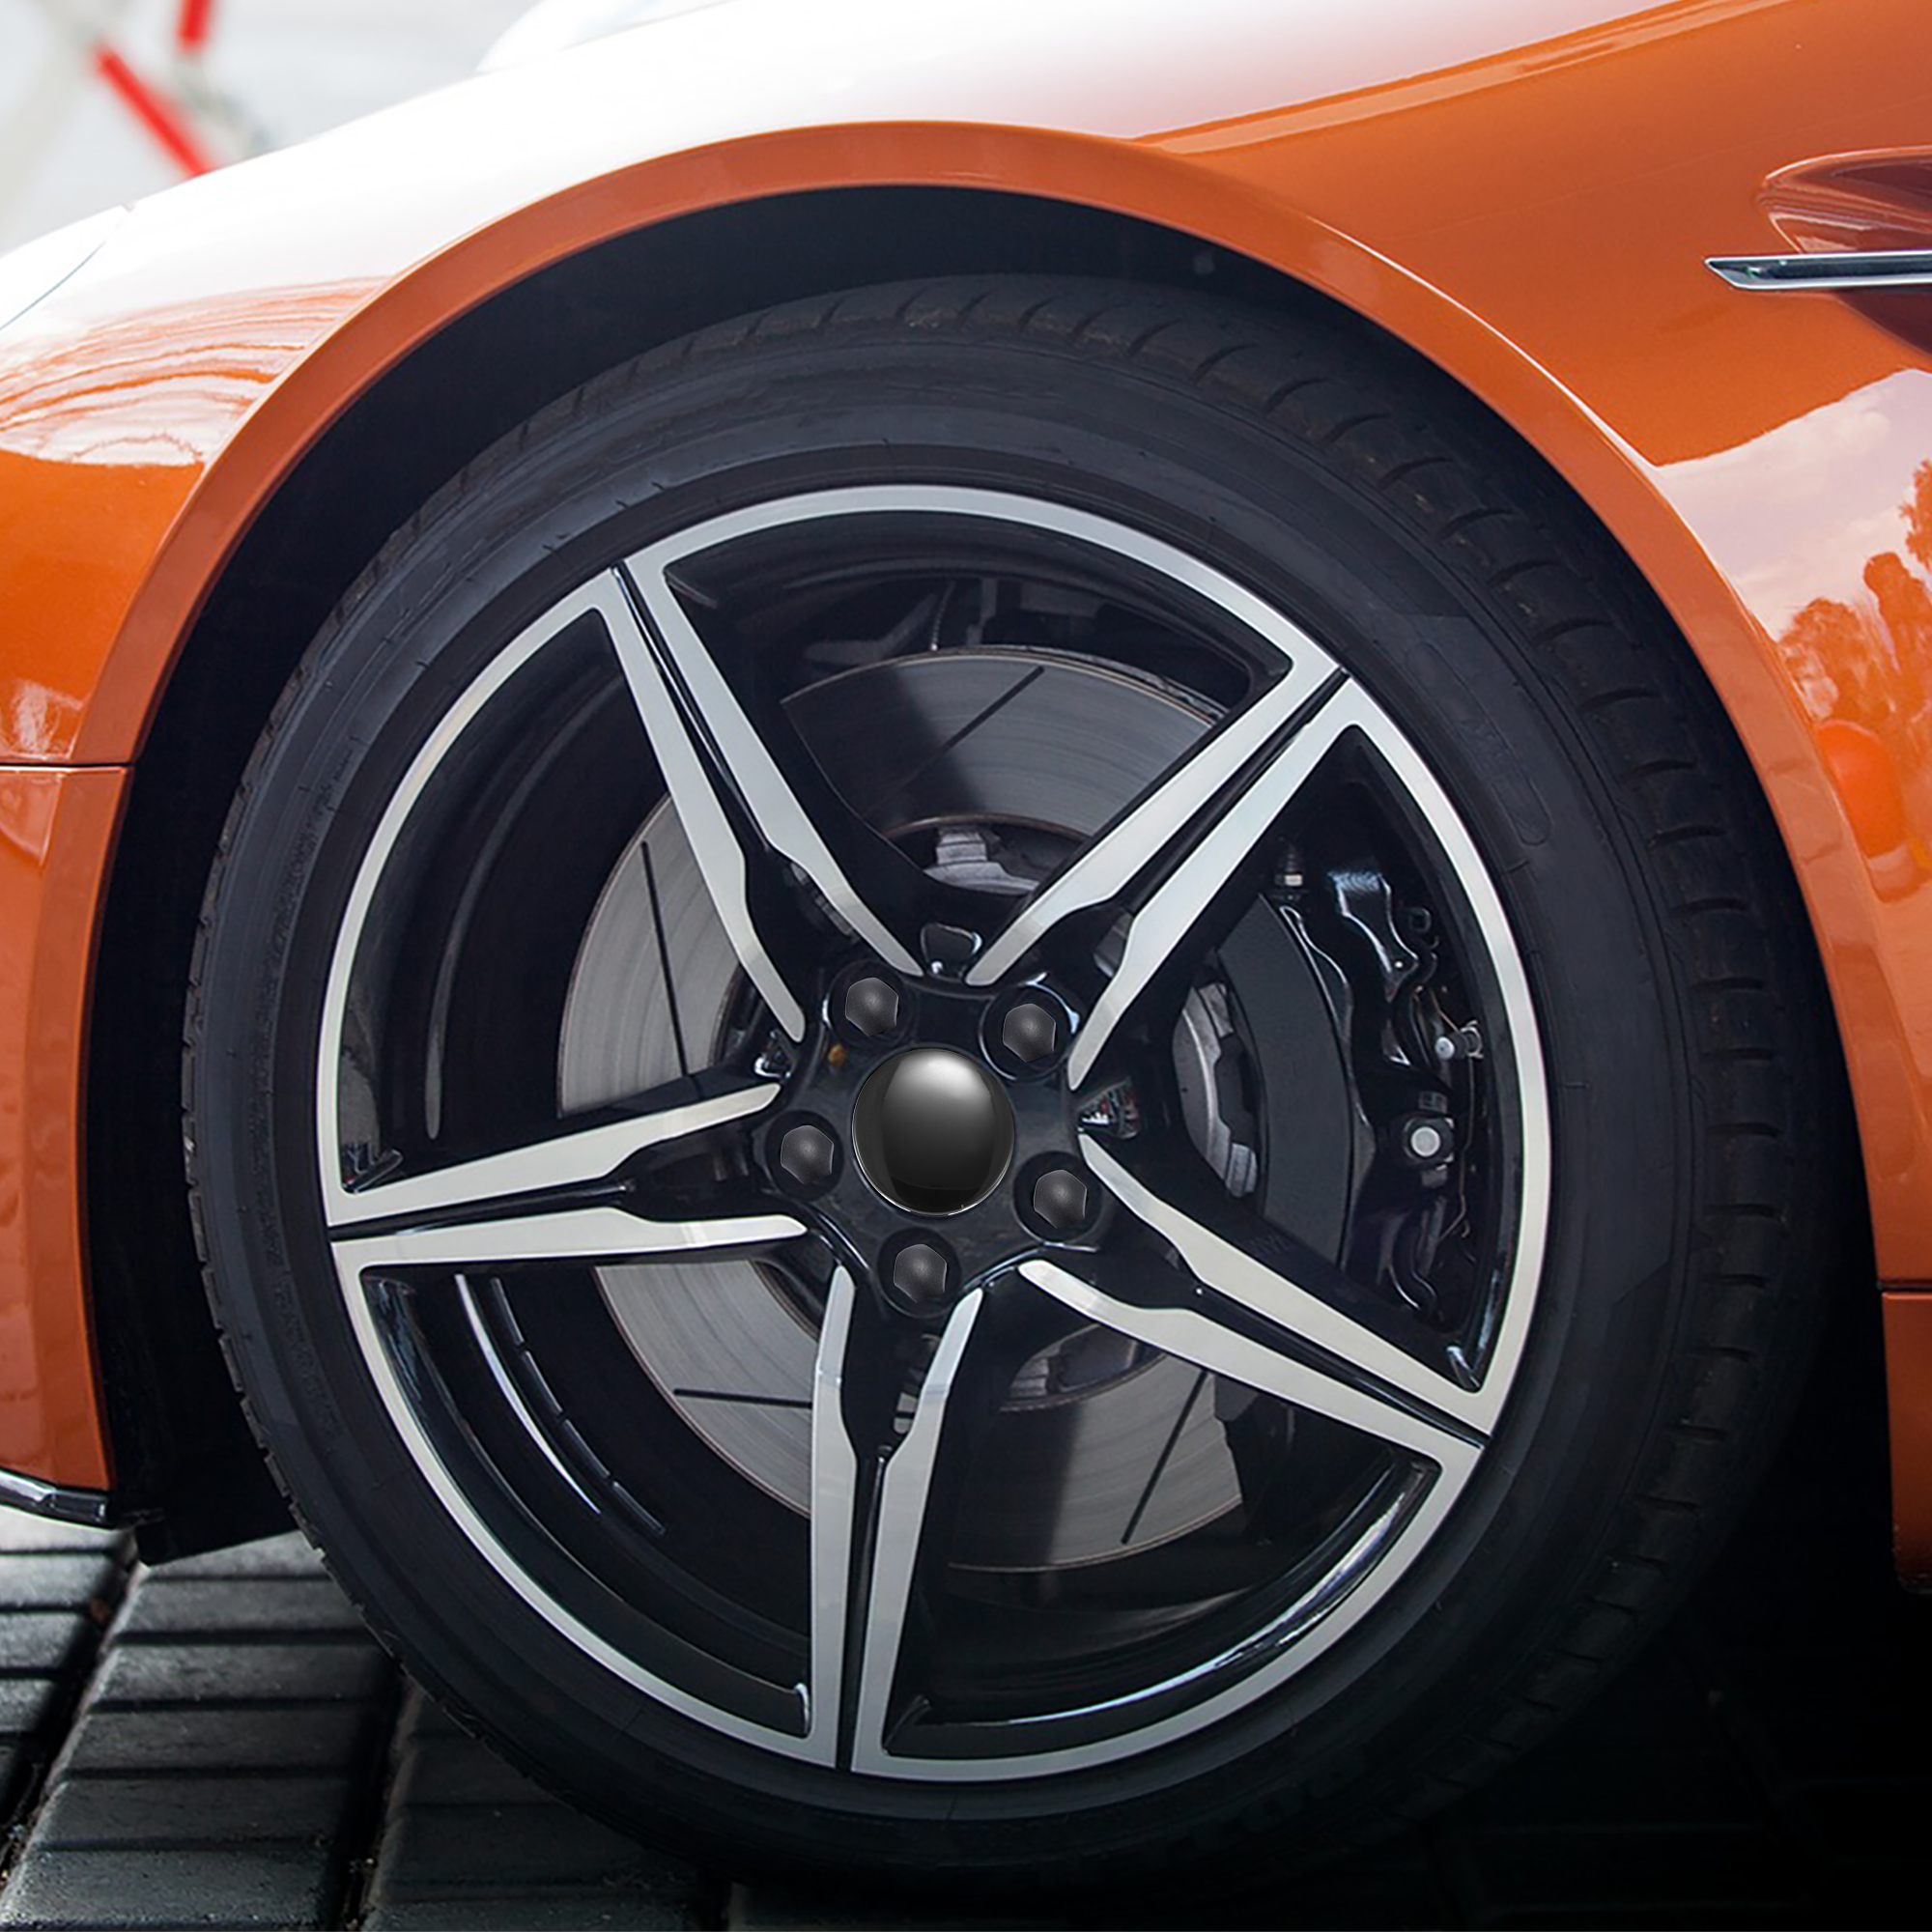 Unique Bargains Wheel Tyre Center Hub Caps Cover Kit w/ Lug Nut Cover for Tesla Model 3 Y S x